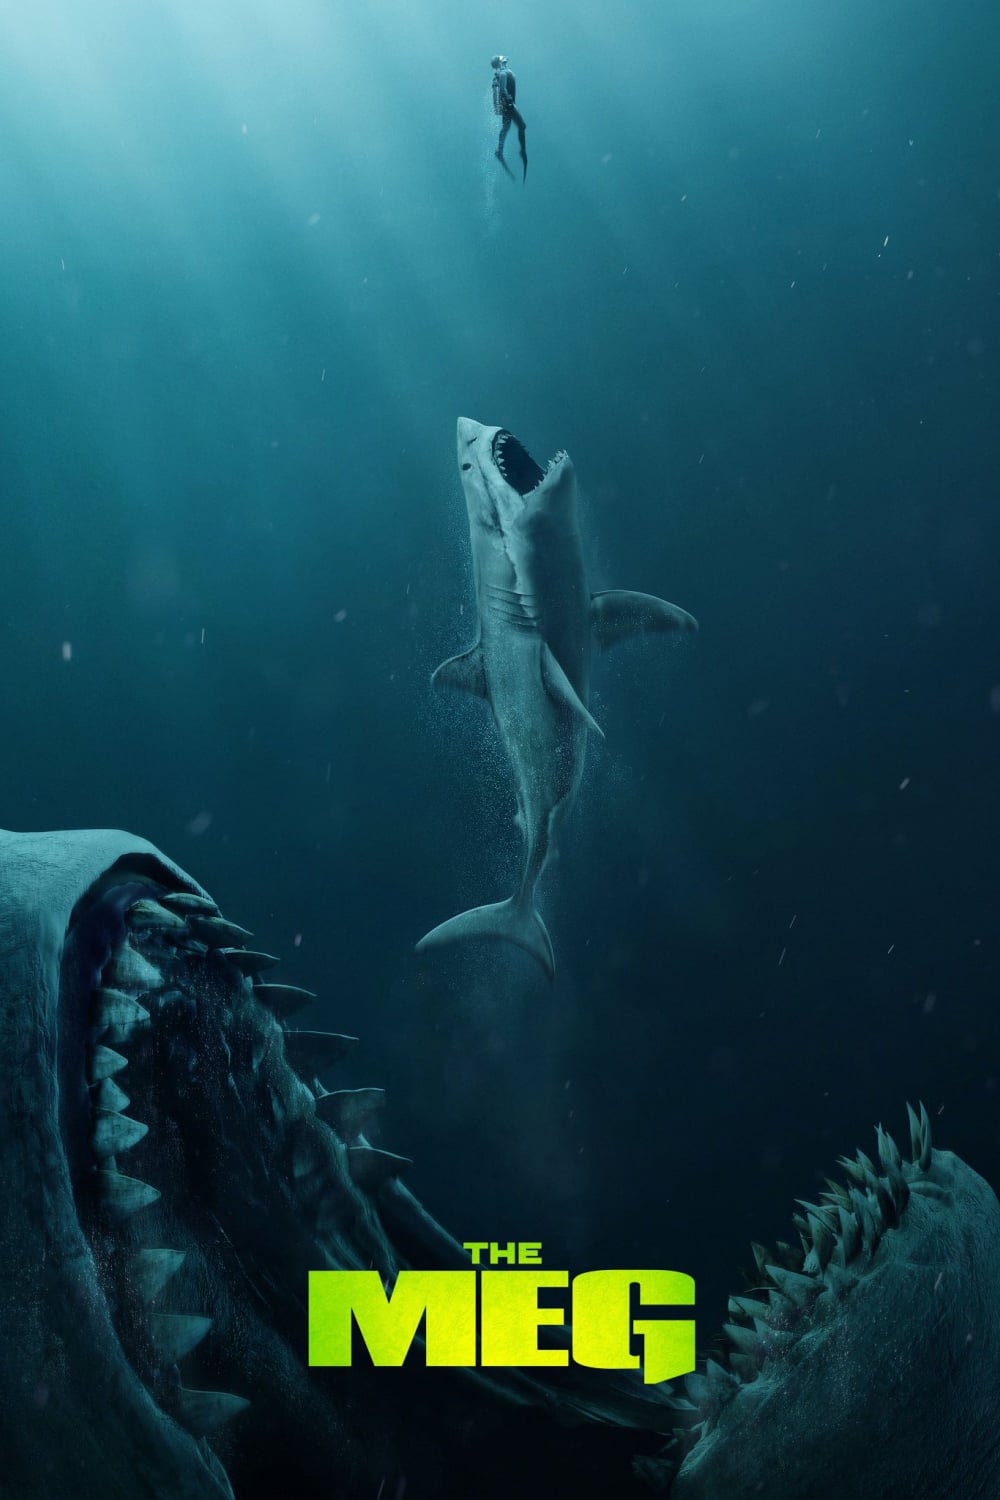 Plakat von "The Meg"